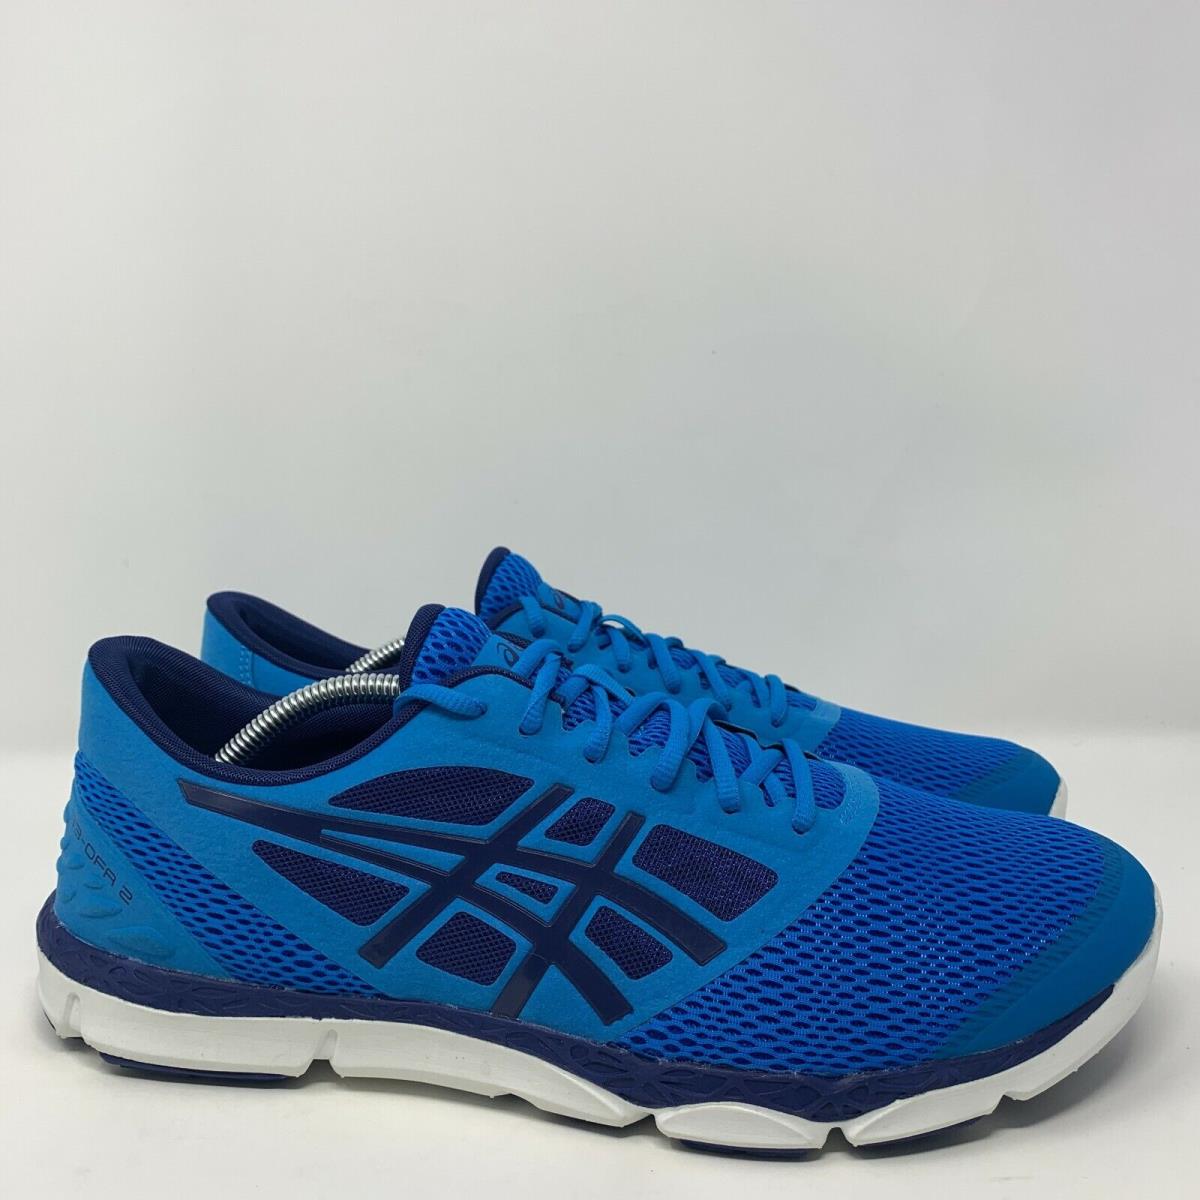 Perceptual compact Serious Asics 33 Dfa 2 Running Shoes Mens Size 12.5 Blue Athletic Training Sneakers  | 074663720803 - ASICS shoes DFA - Blue | SporTipTop